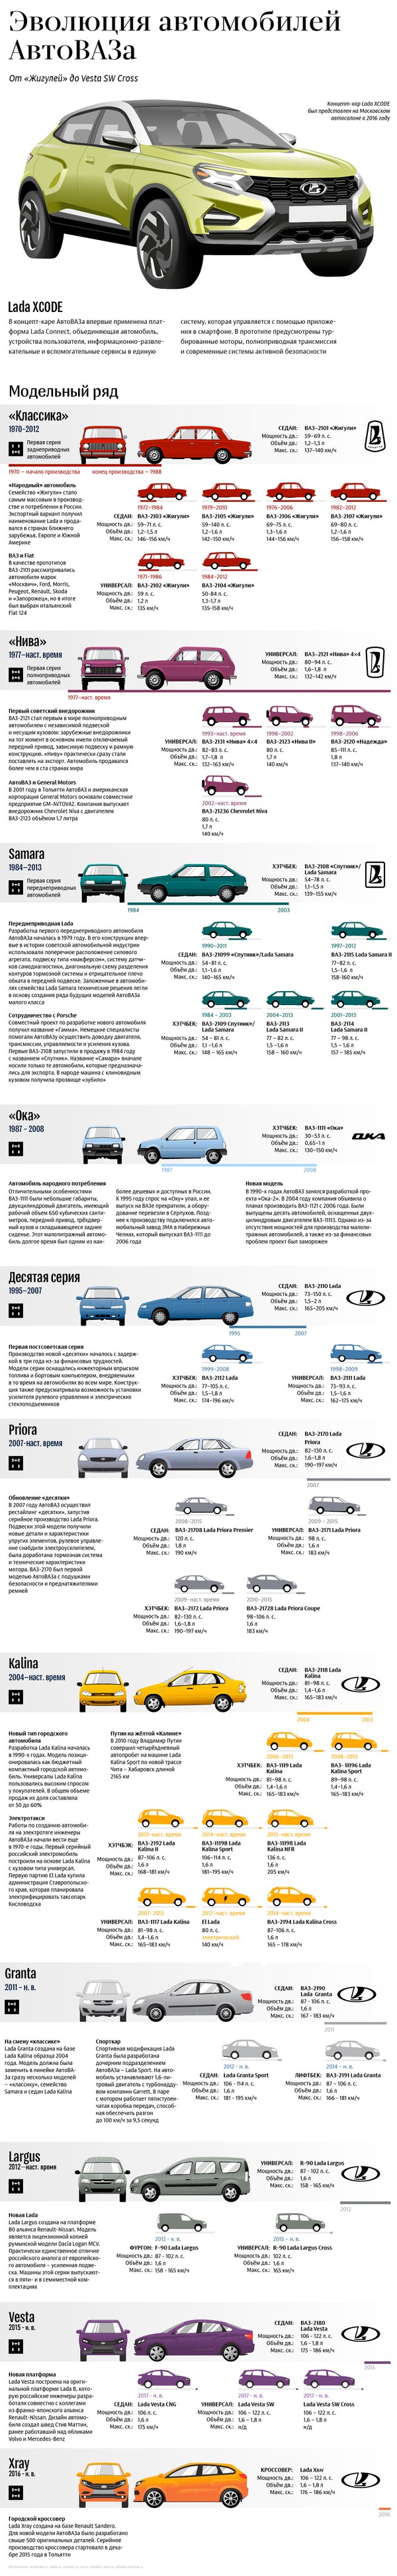 Эволюция автомобилей АвтоВАЗа - Sputnik Молдова